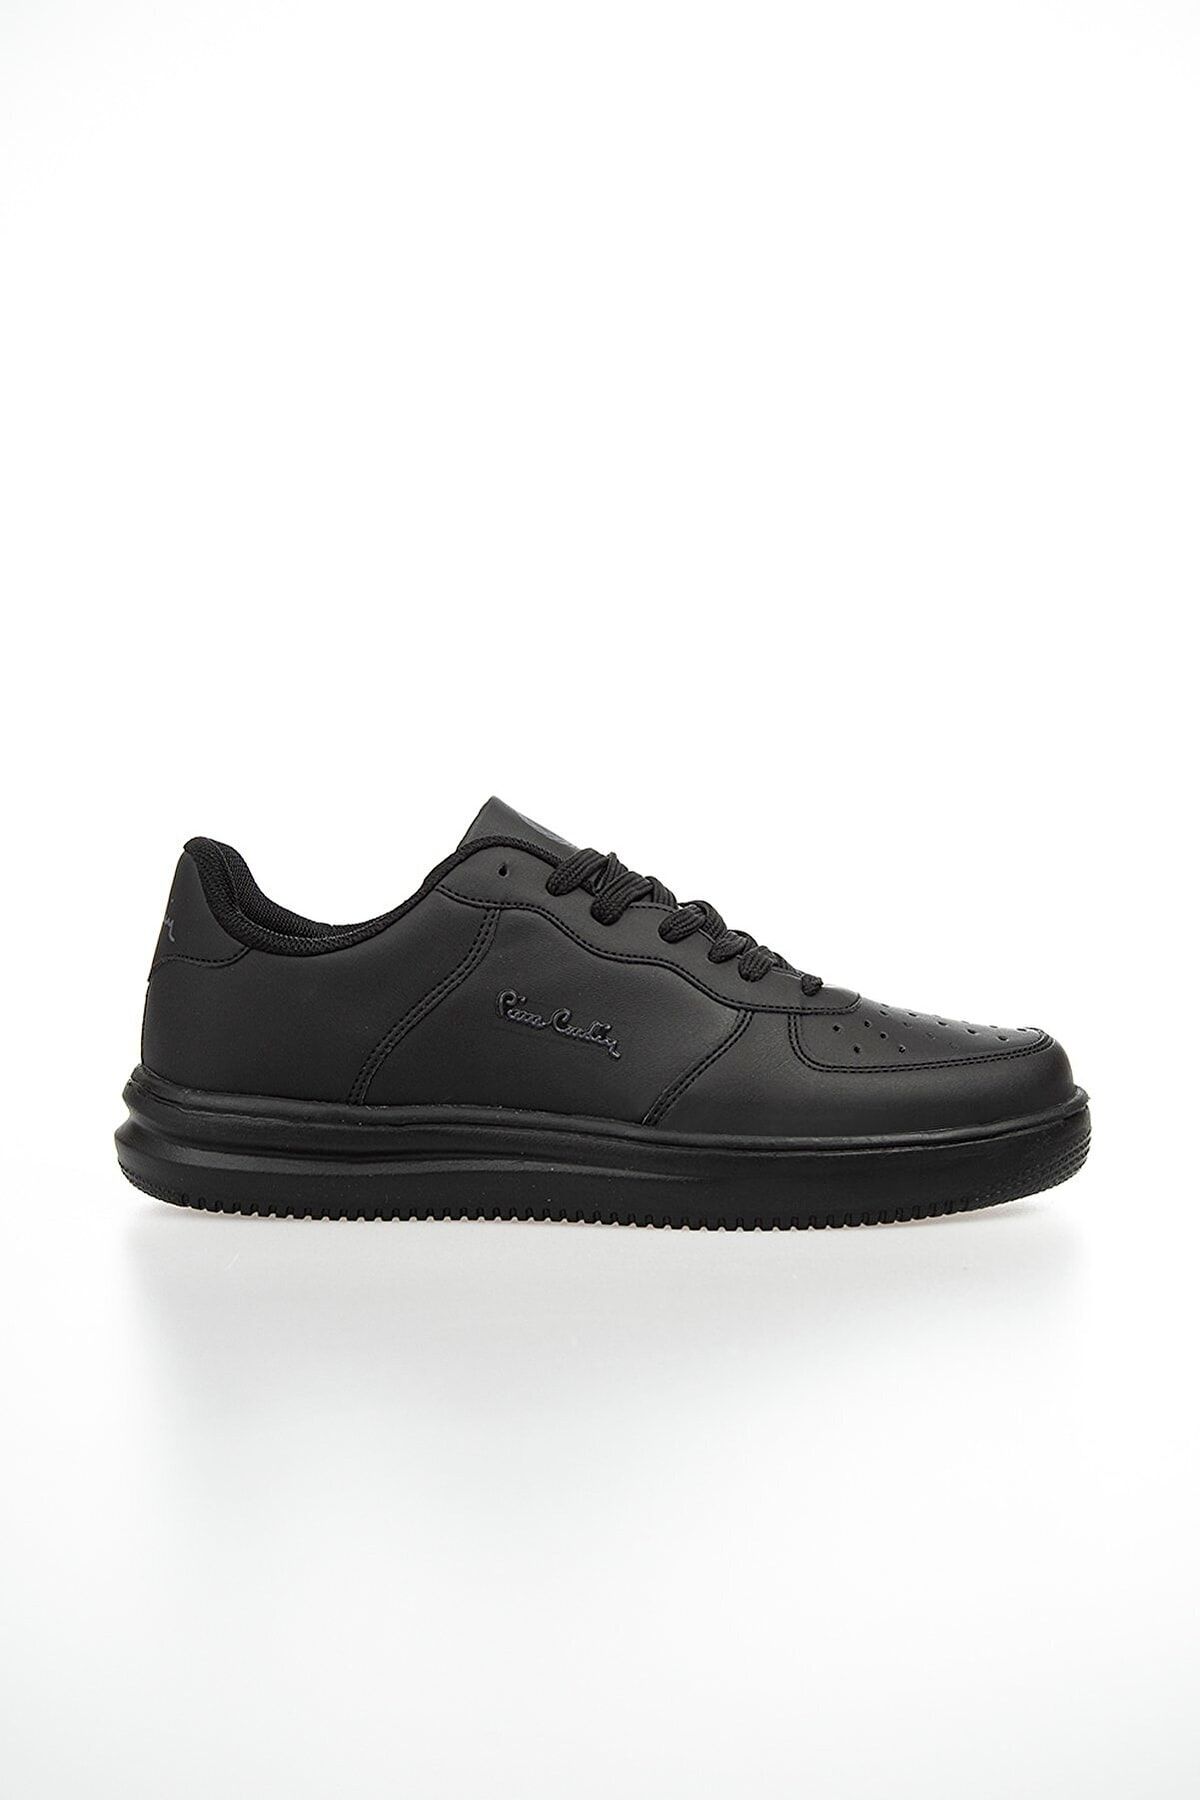 Pierre Cardin Siyah - Pcs-10155 Sneakers